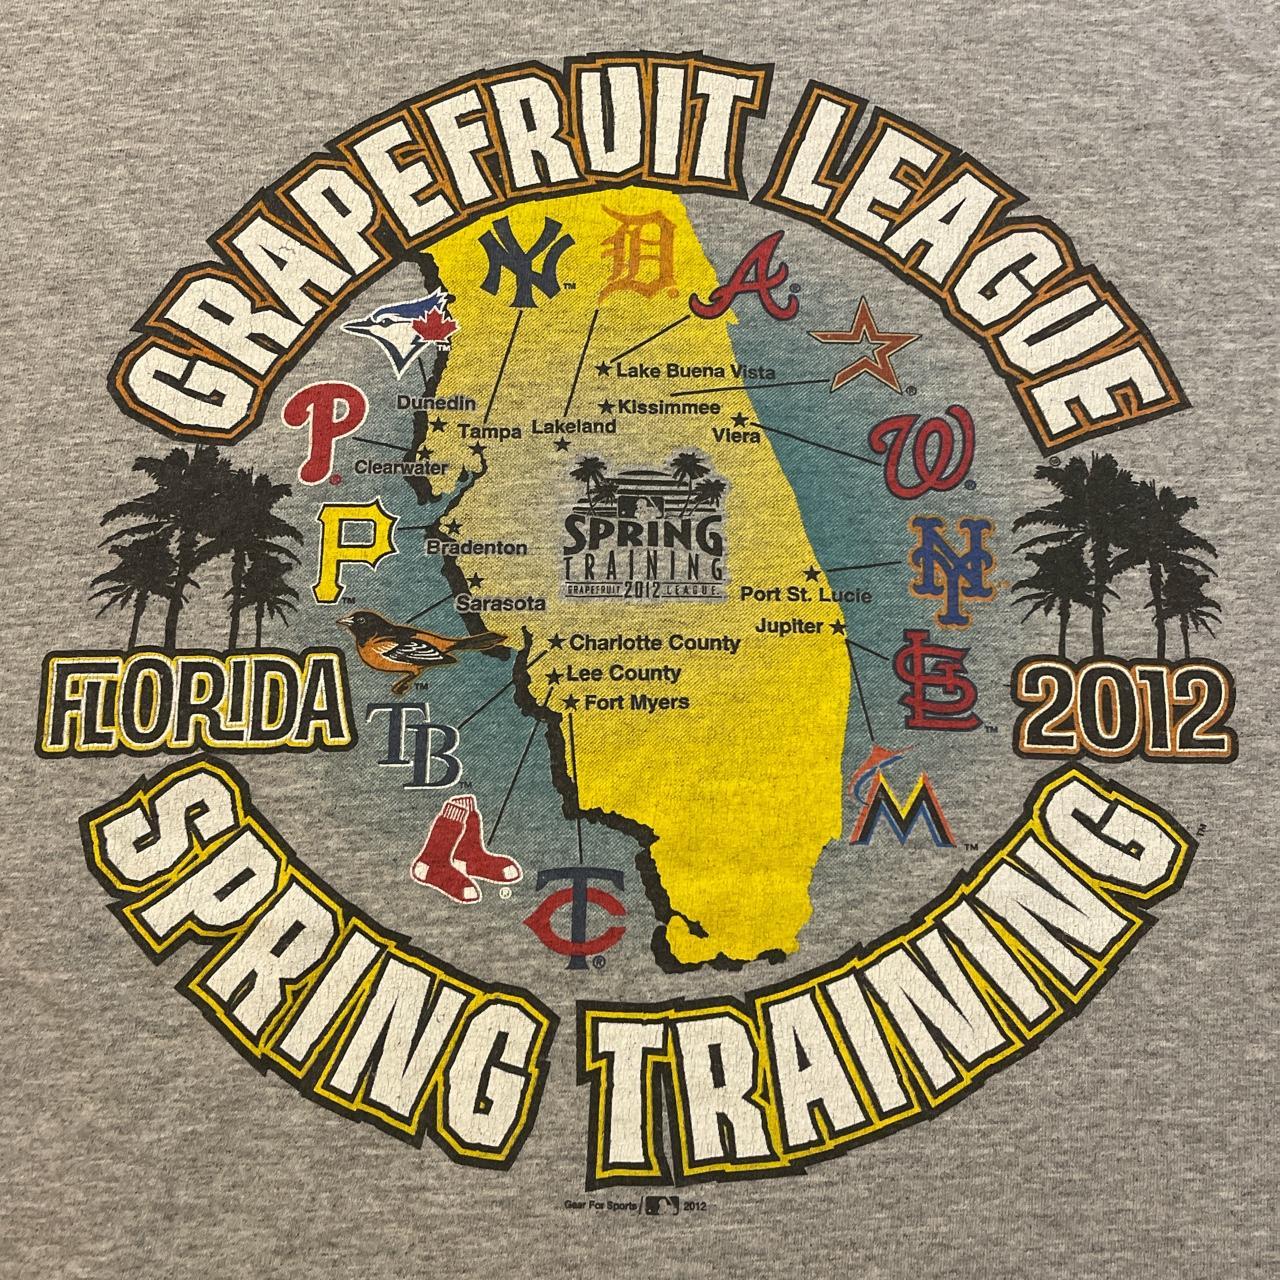 Nike Men's Grapefruit League Black Spring Training T-Shirt